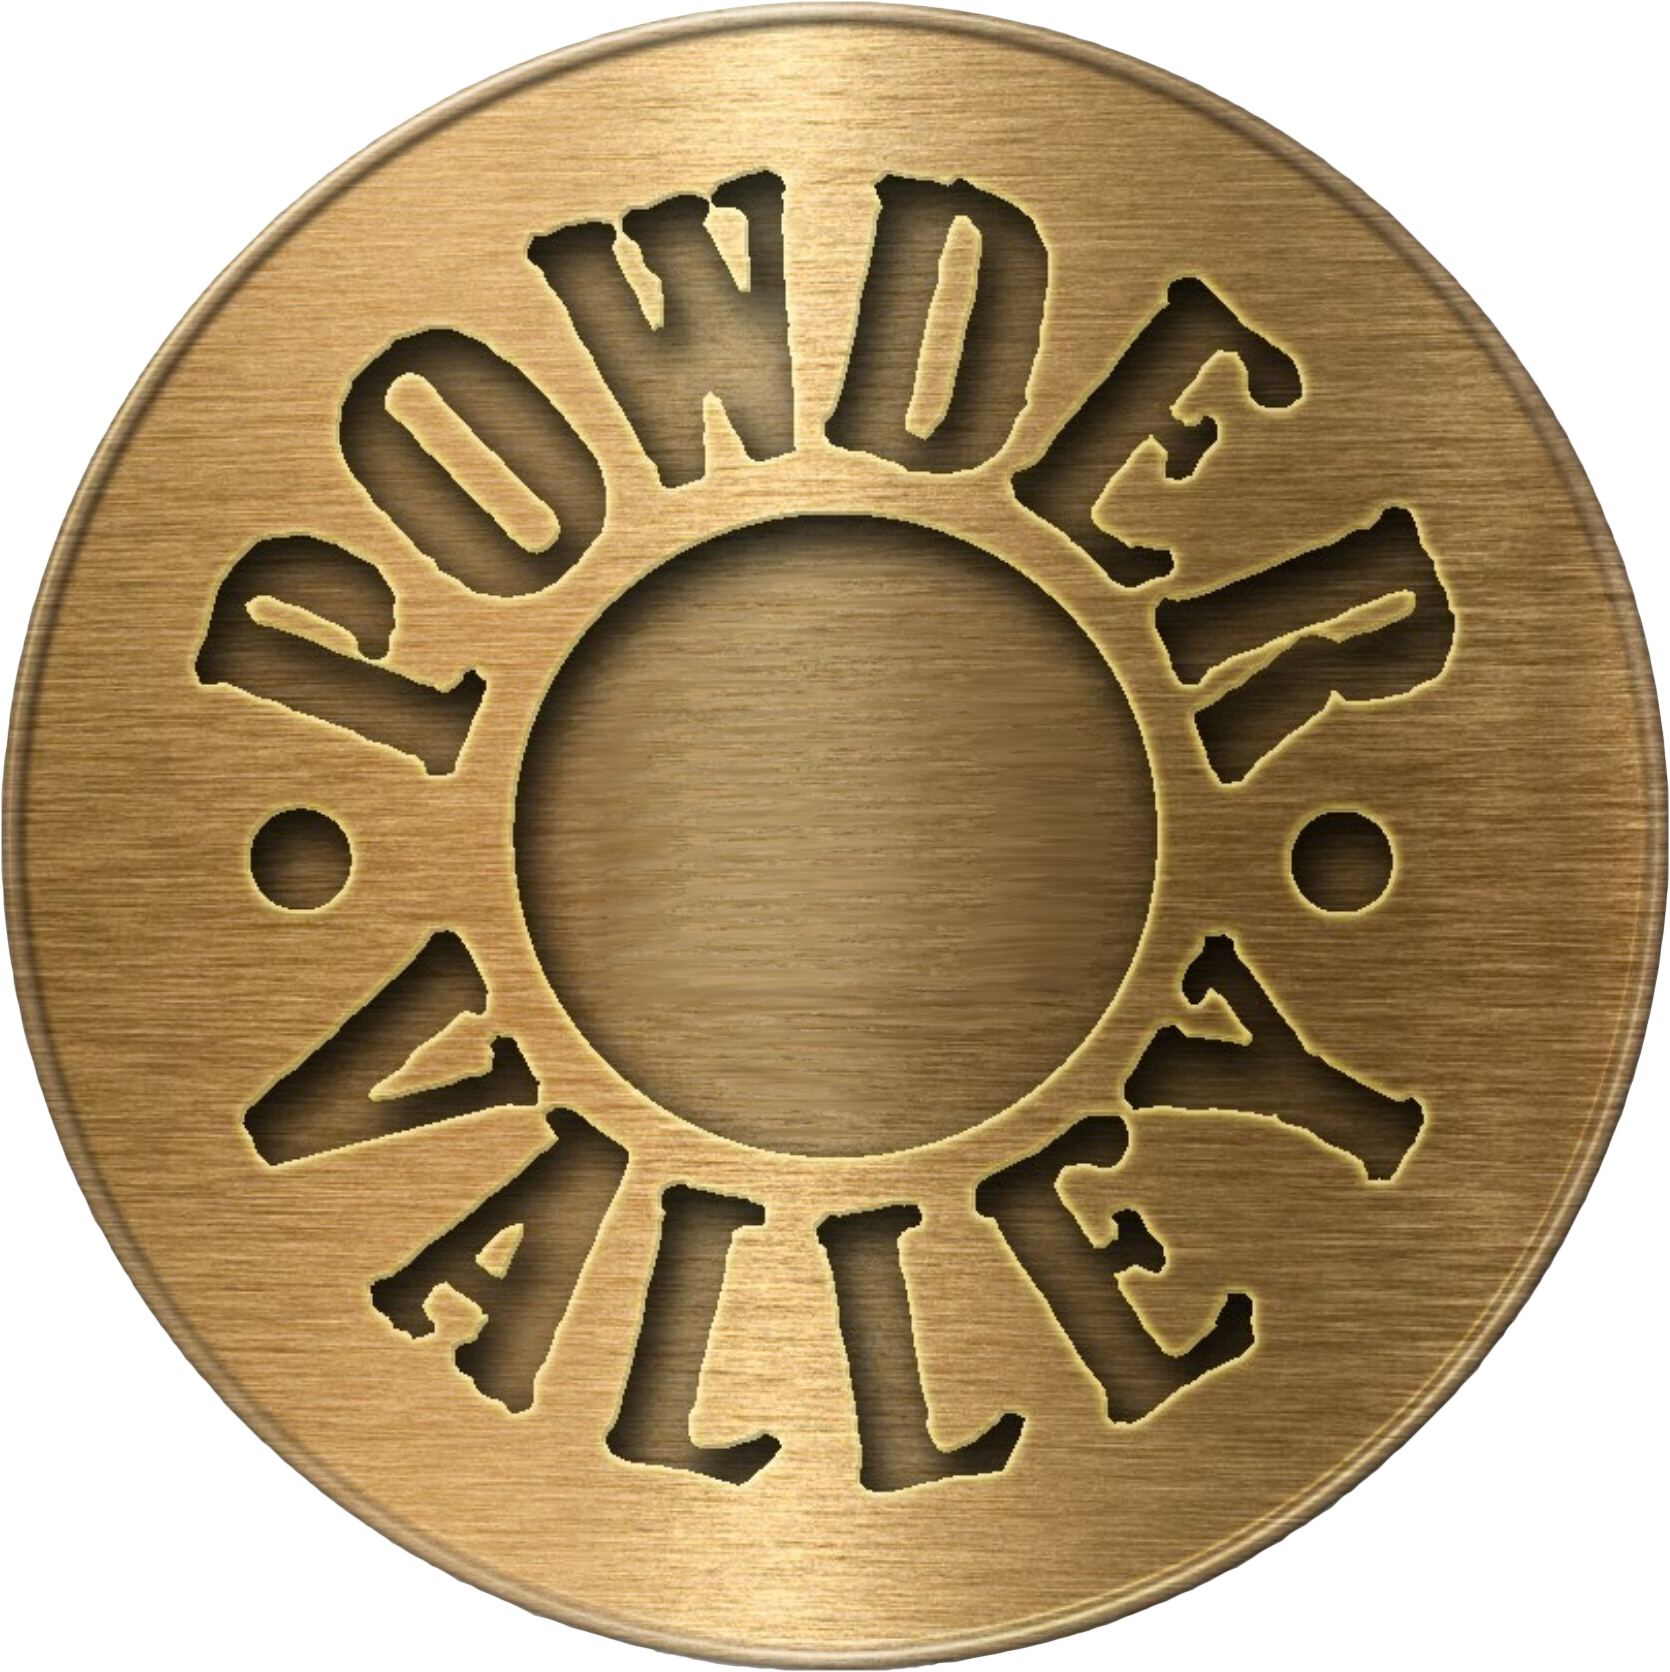 Powder Valley logo